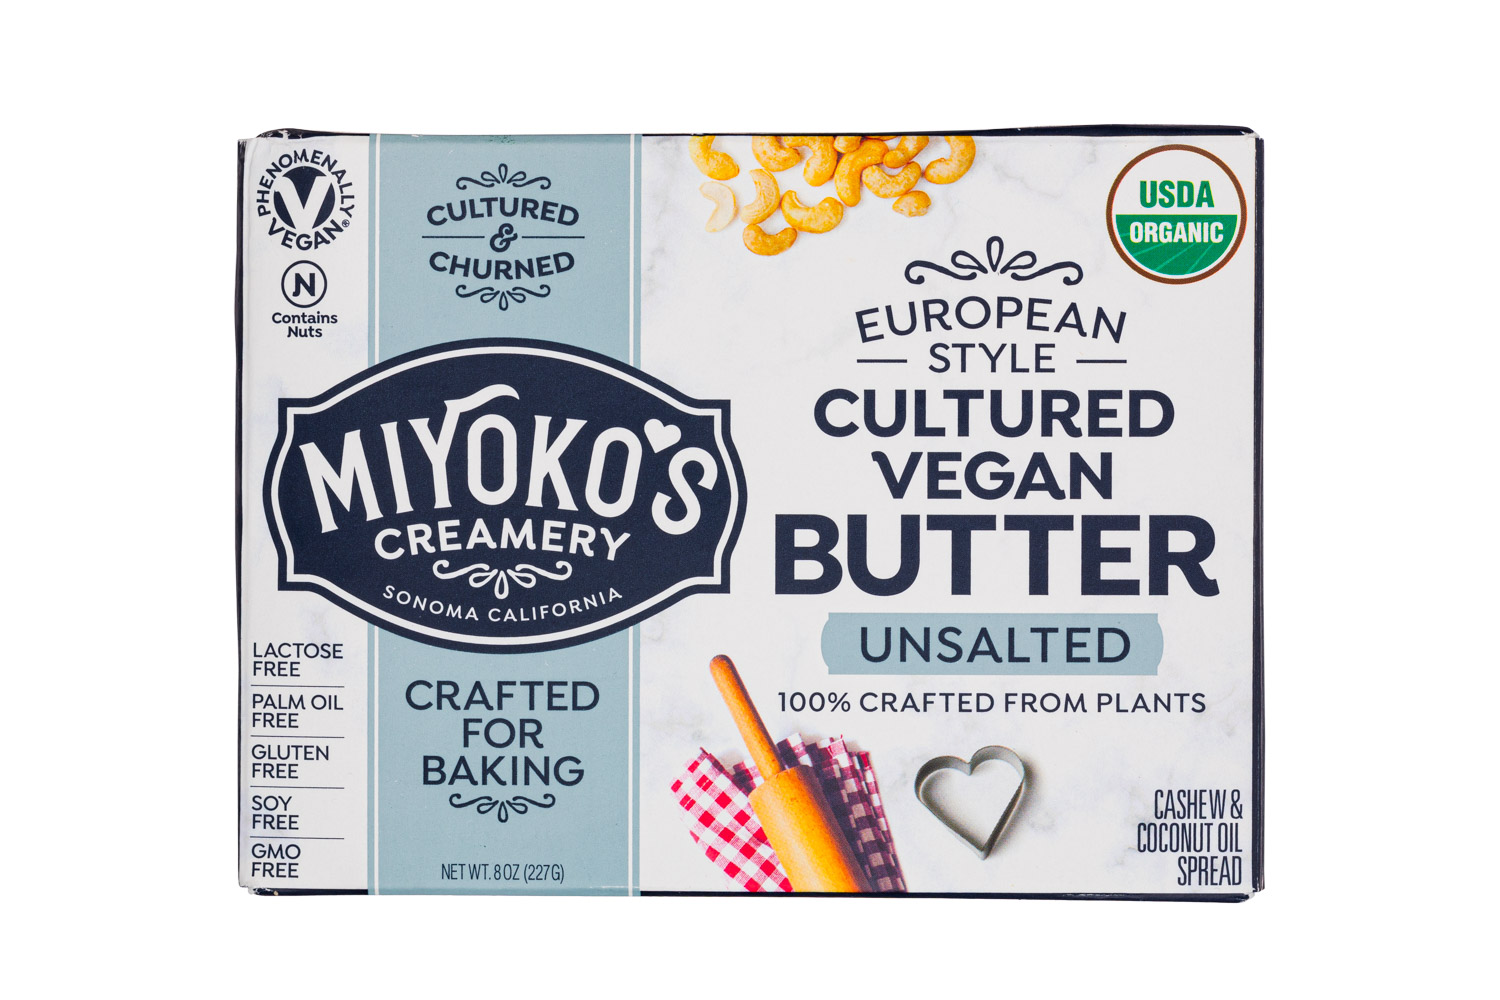 European Style Vegan Butter - Unsalted 2020